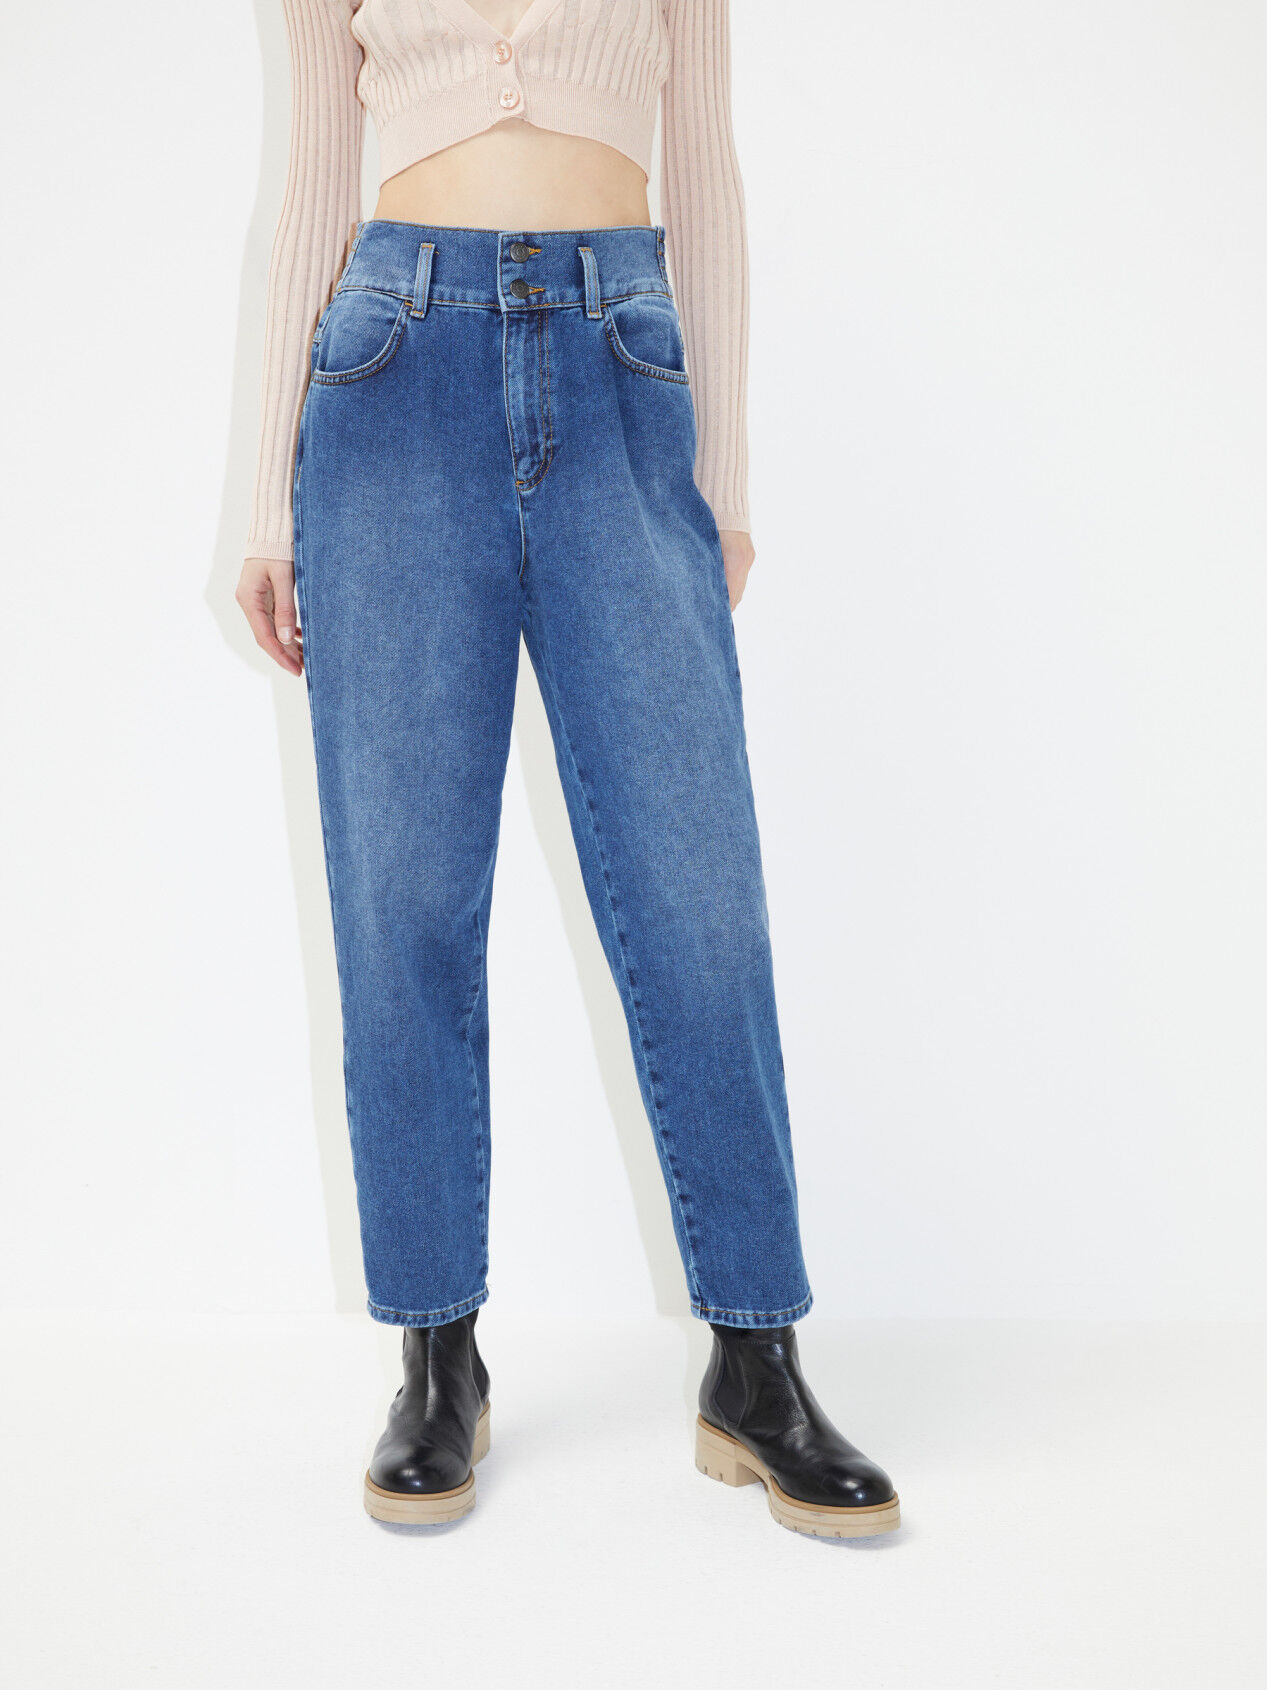 WOMEN FASHION Jeans Capri jeans Basic discount 65% Obstaculo capri jeans Blue 34                  EU 